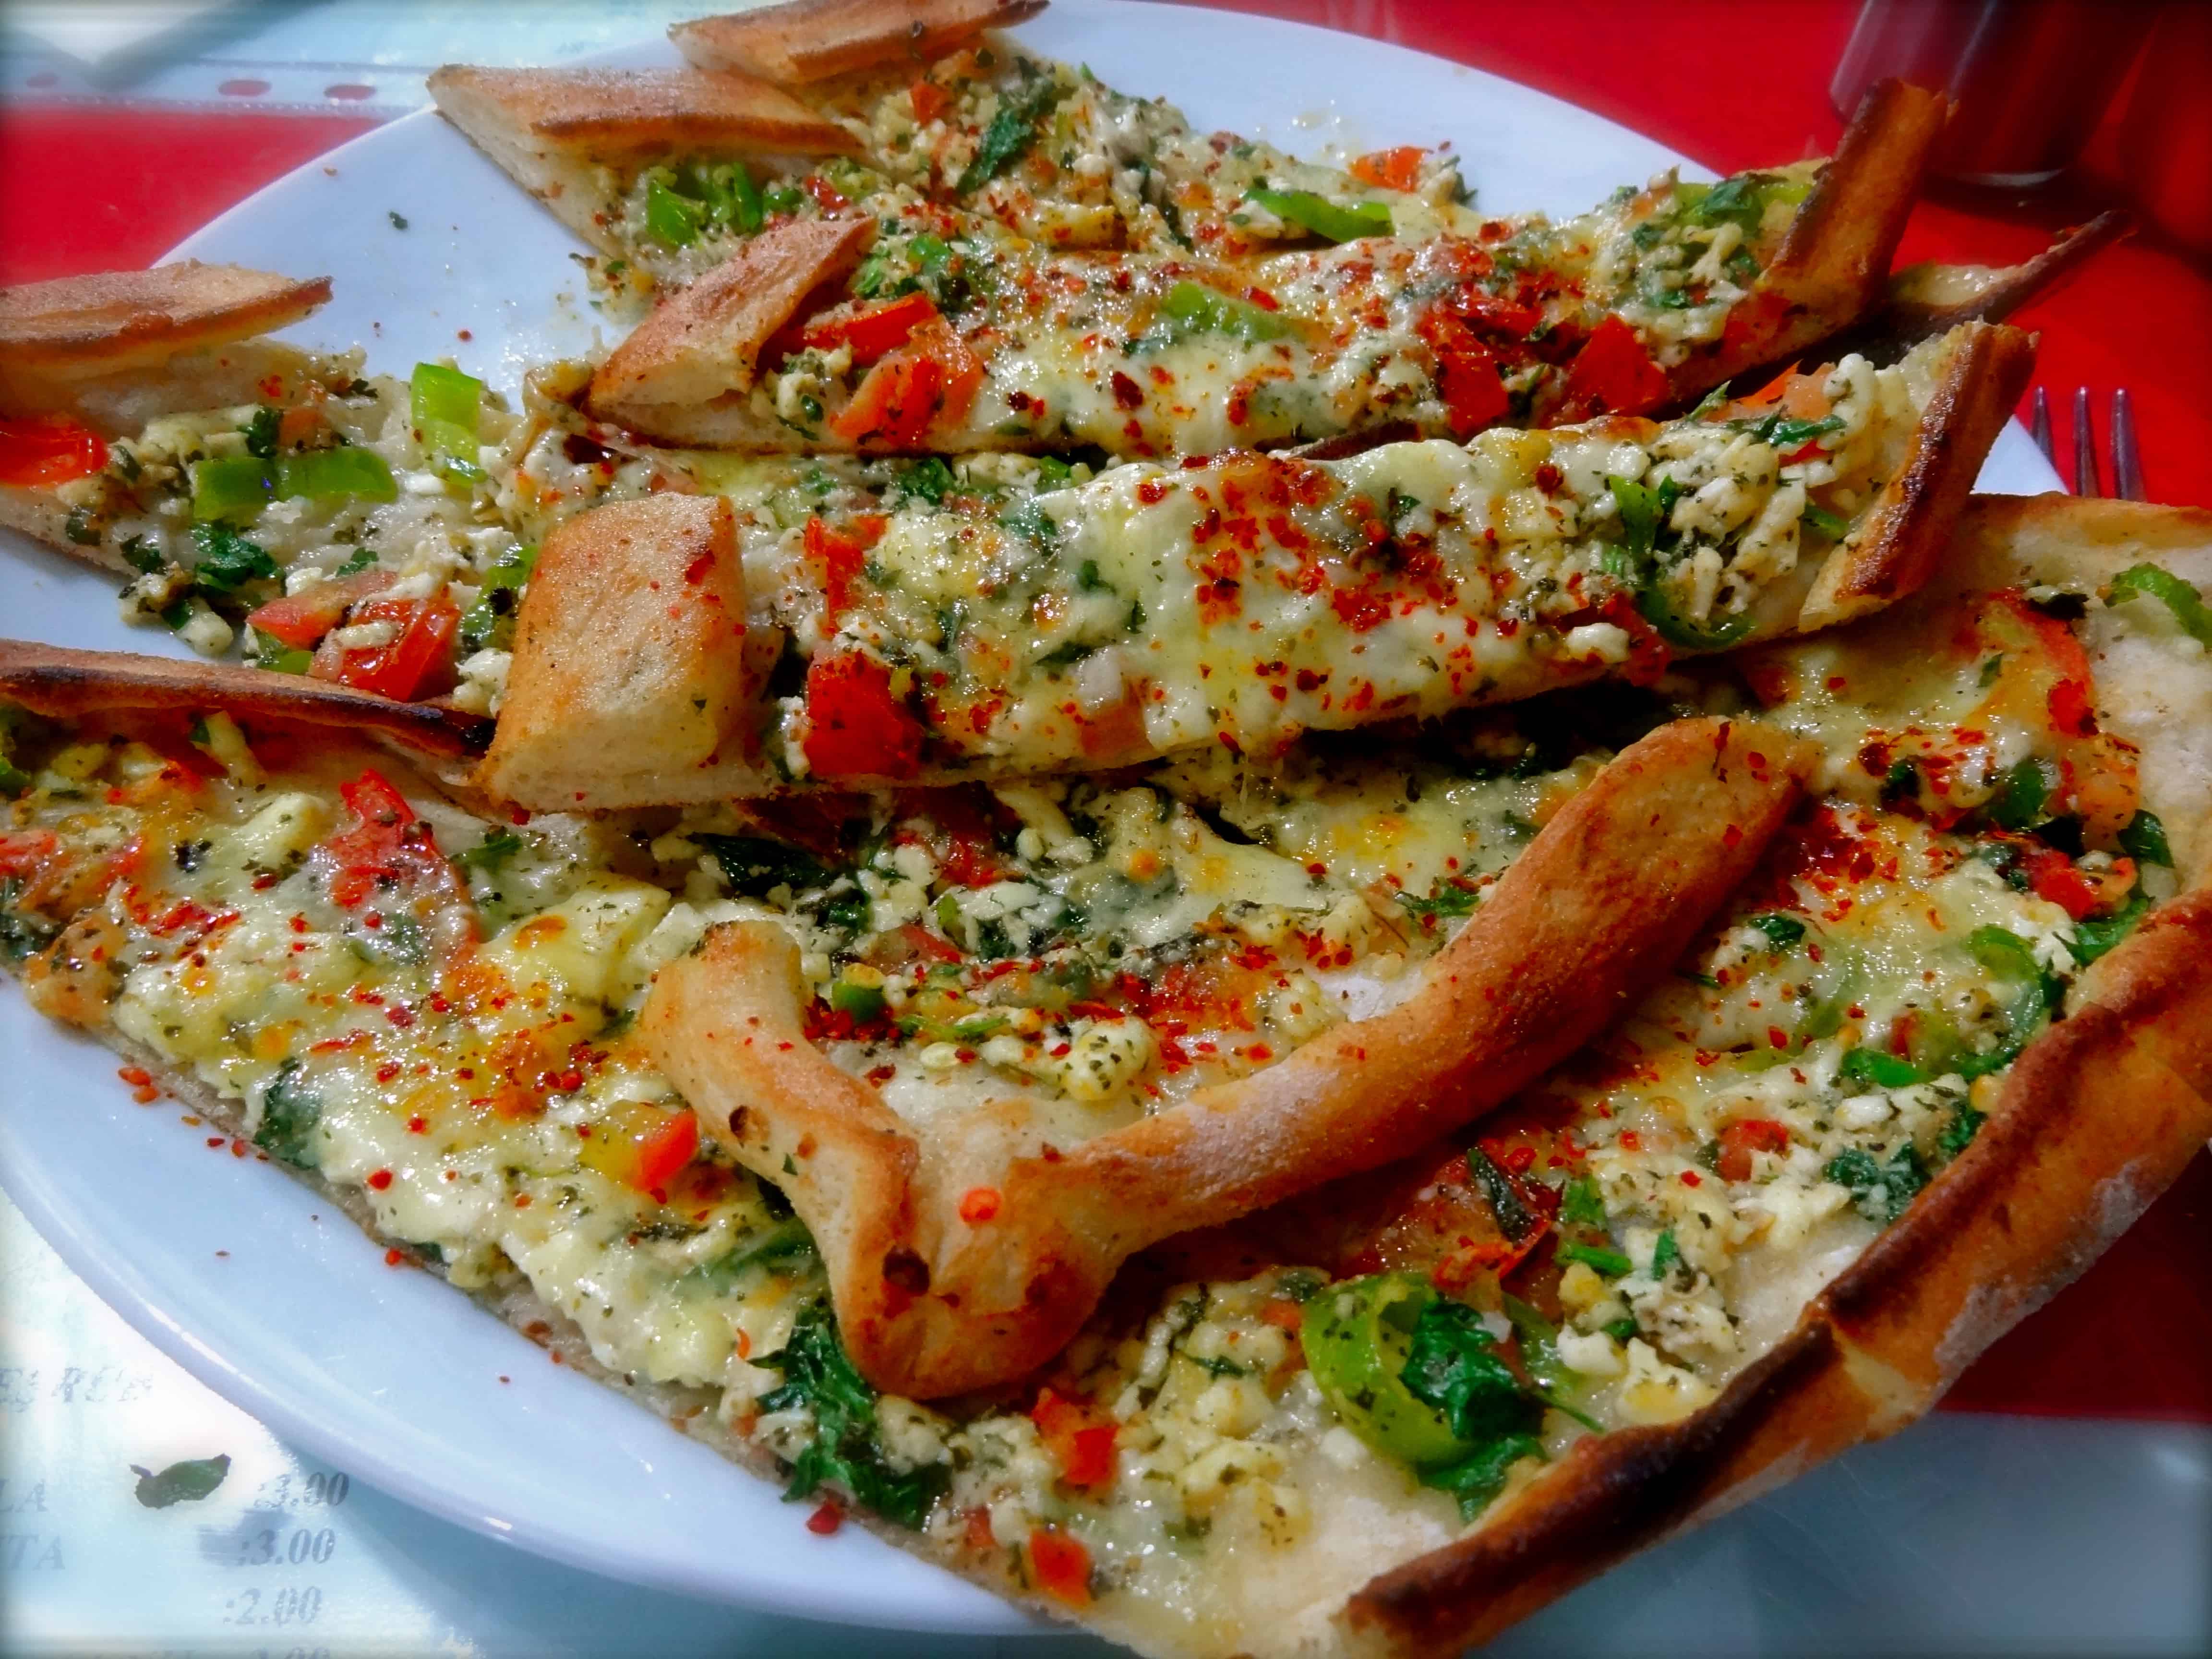 Turkish pide, vegetarian pide